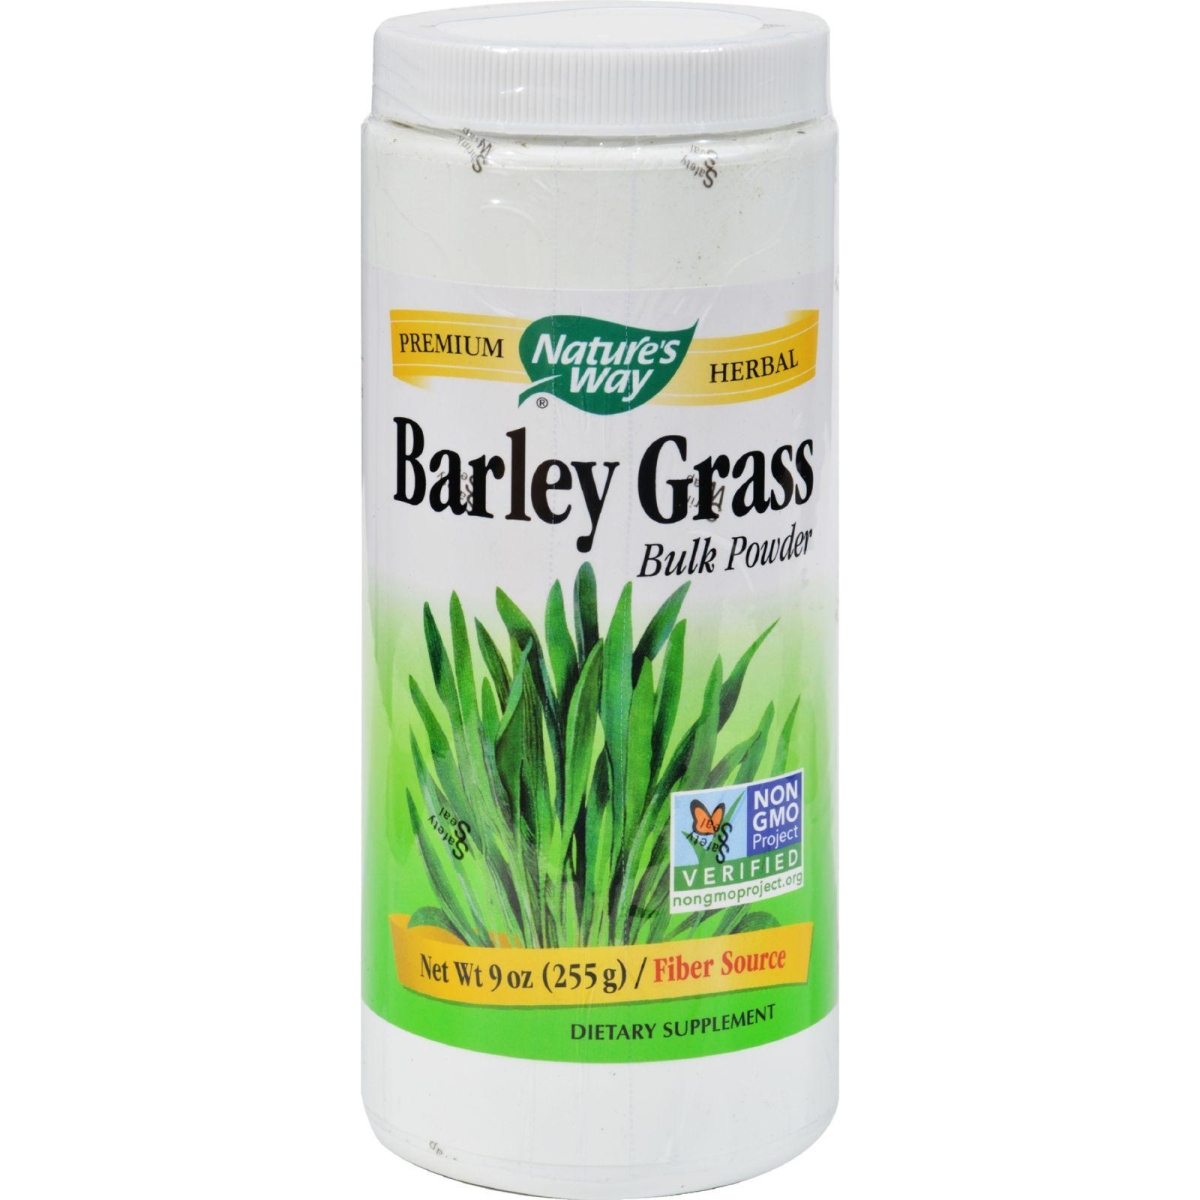 Hg0179028 9 Oz Barley Grass Bulk Powder